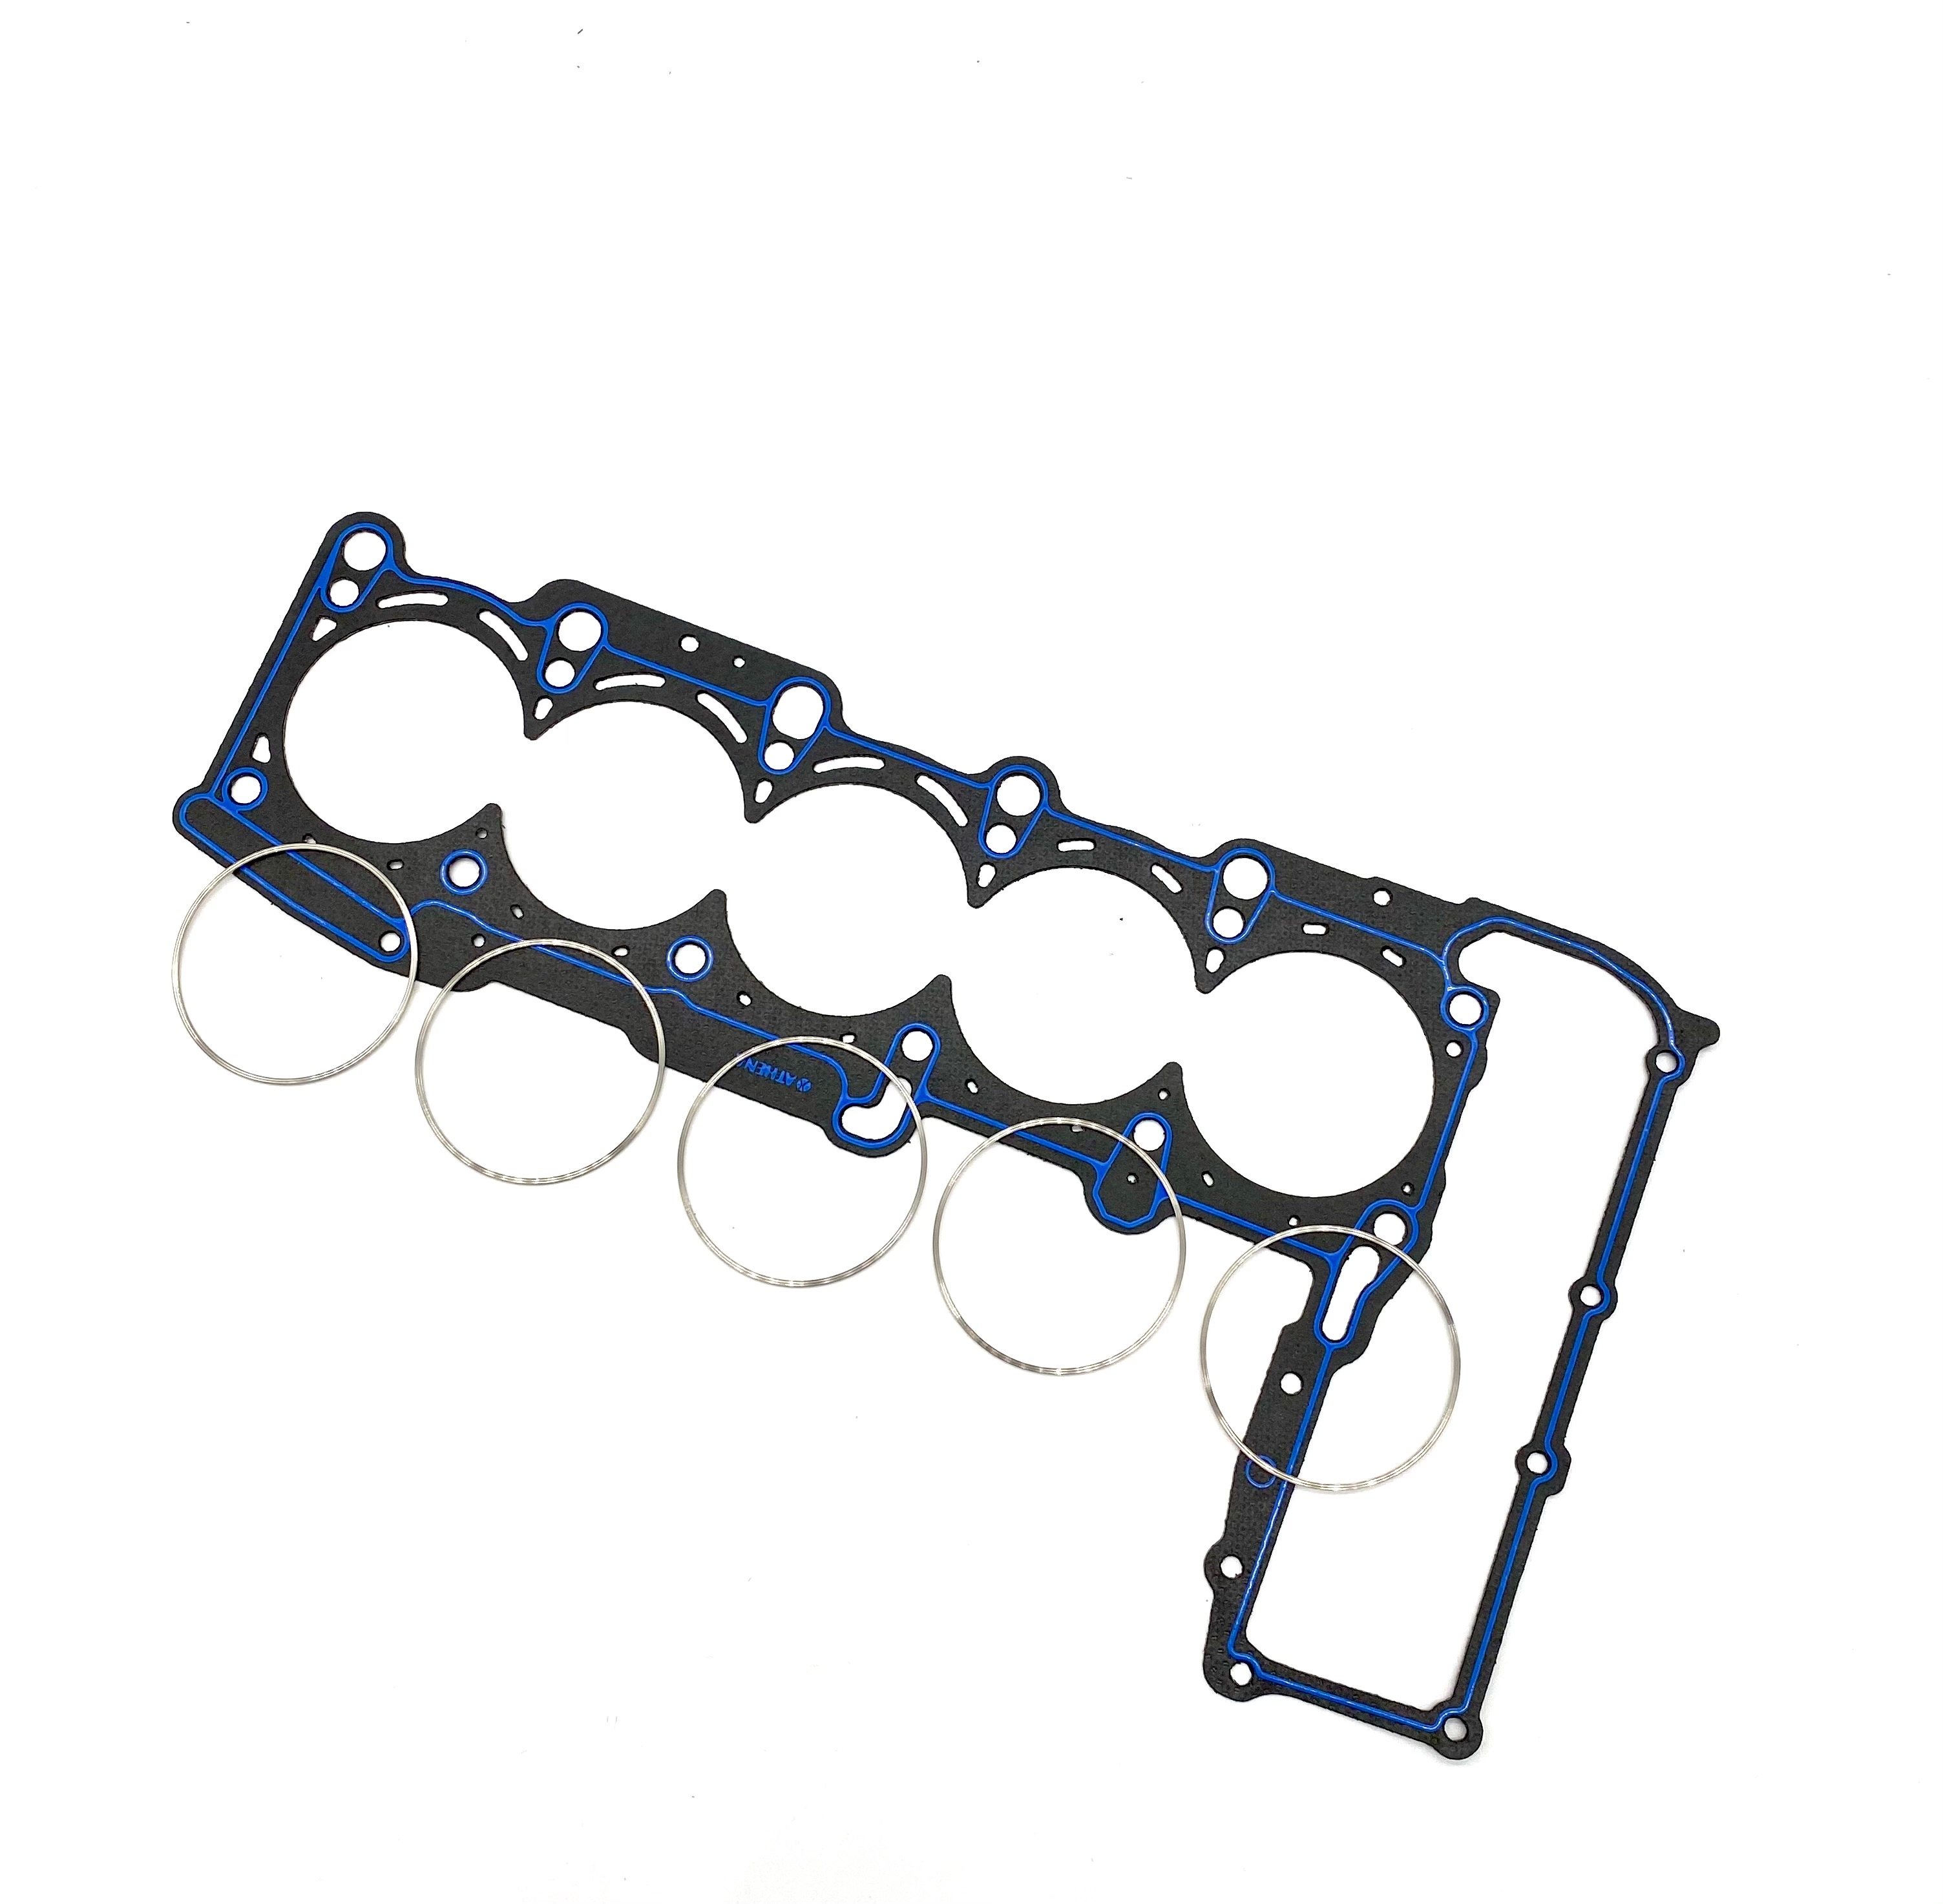  5 ZYLINDER Zylinderkopfdichtung CUT RING für Audi 2.5 TFSI RS3 / TTRS / RSQ3 / 83,50mm / 1,40mm | ATHENA